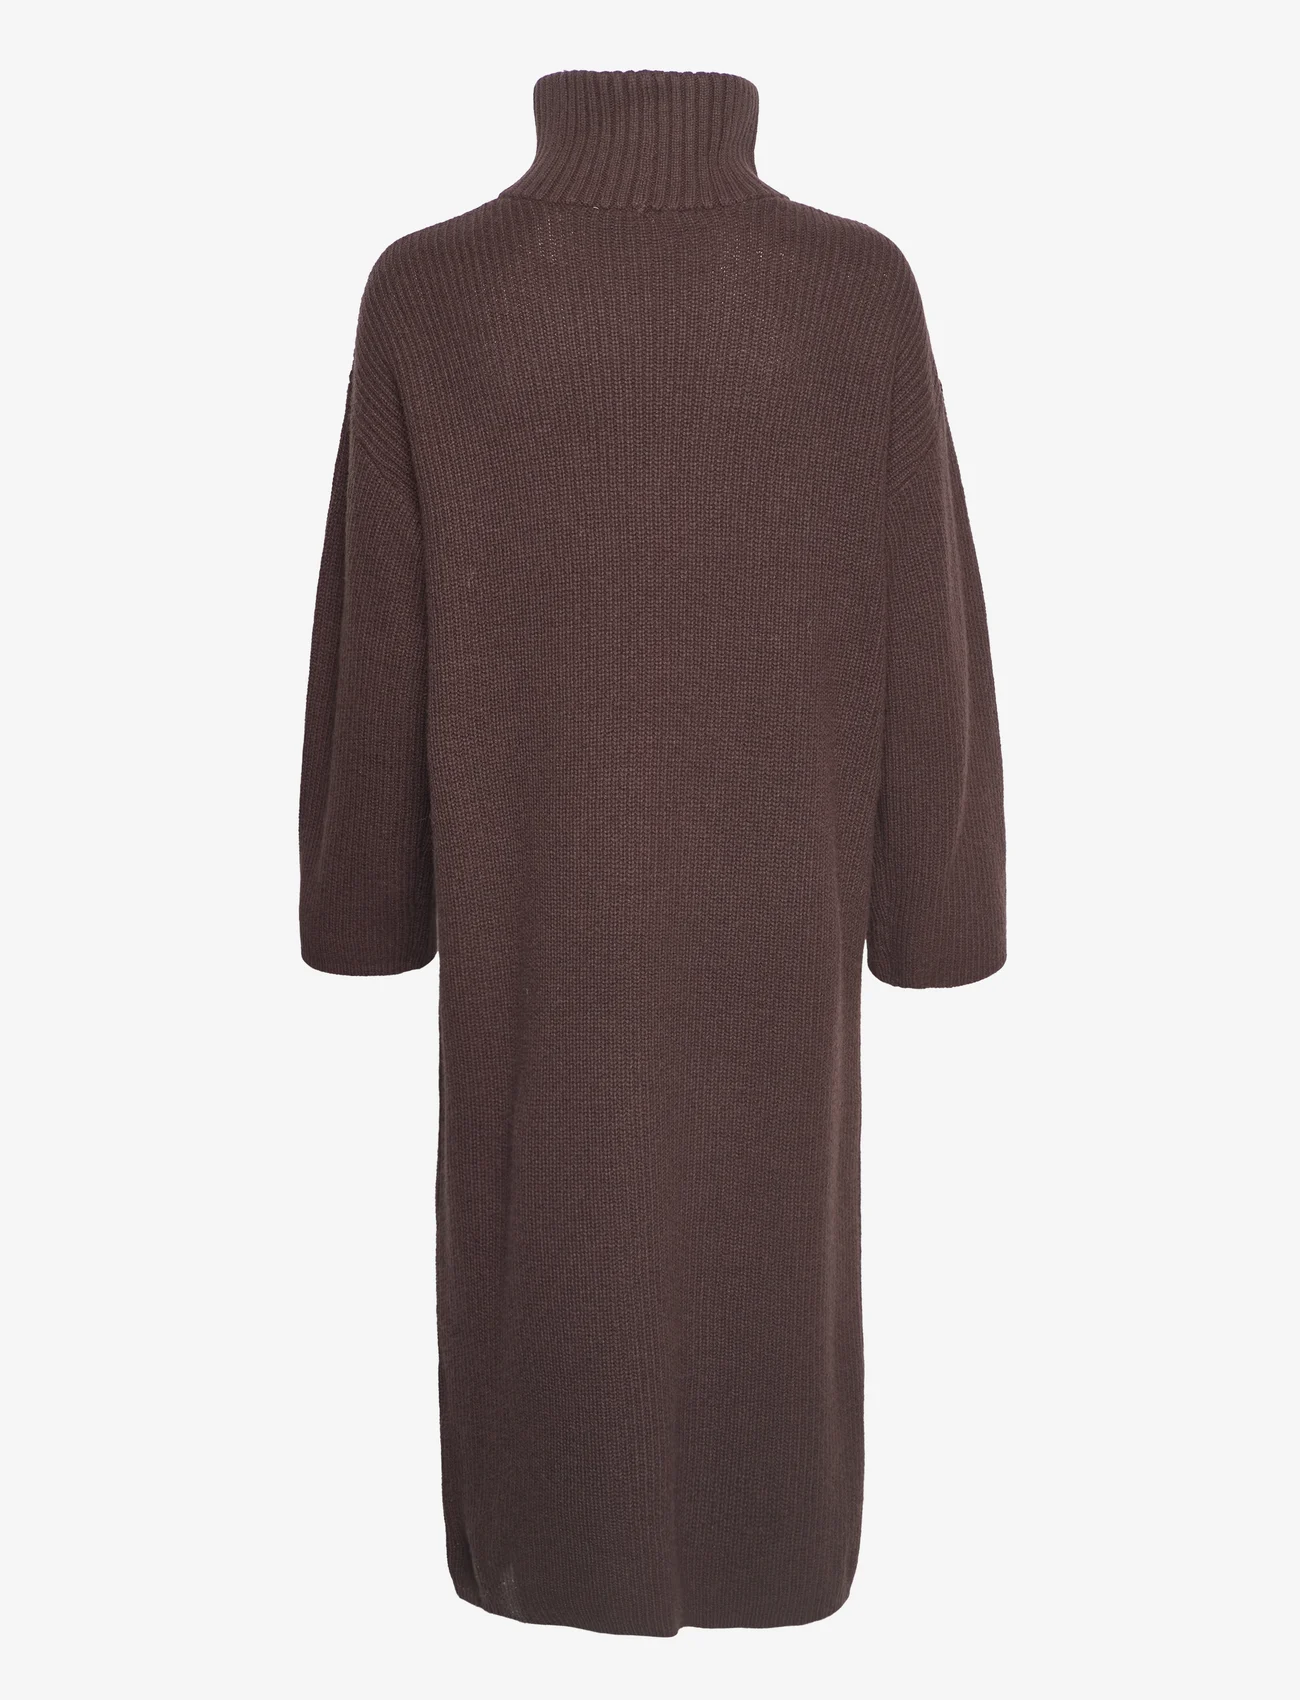 Selected Femme - SLFELINA LS KNIT HIGHNECK DRESS B - knitted dresses - java - 1